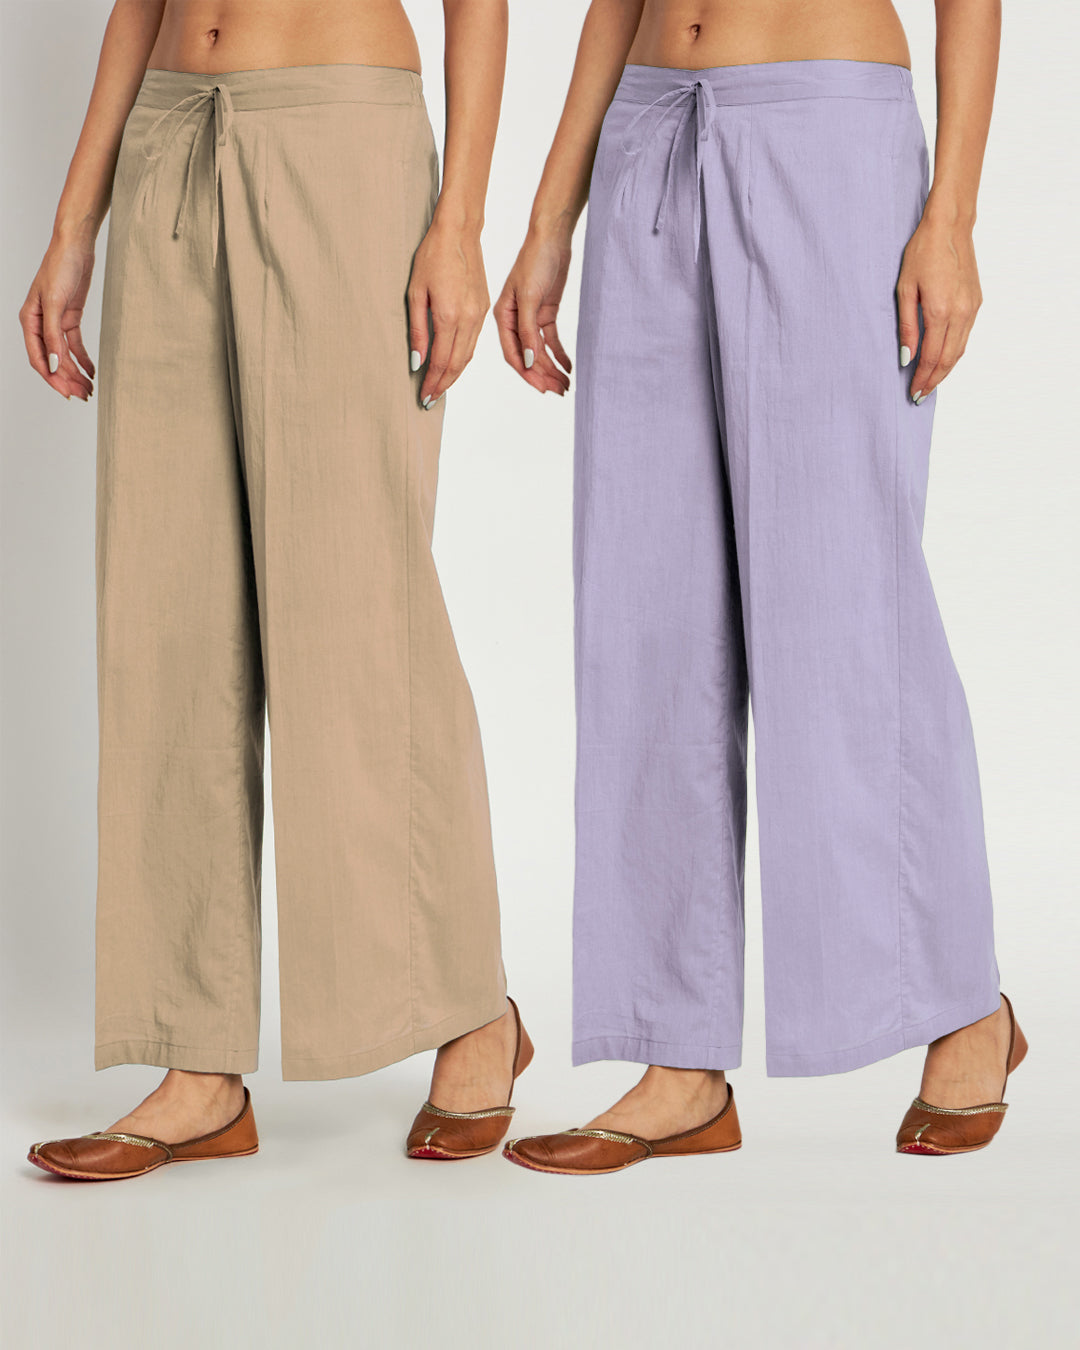 Combo: Beige & Lilac Wide Pants- Set Of 2